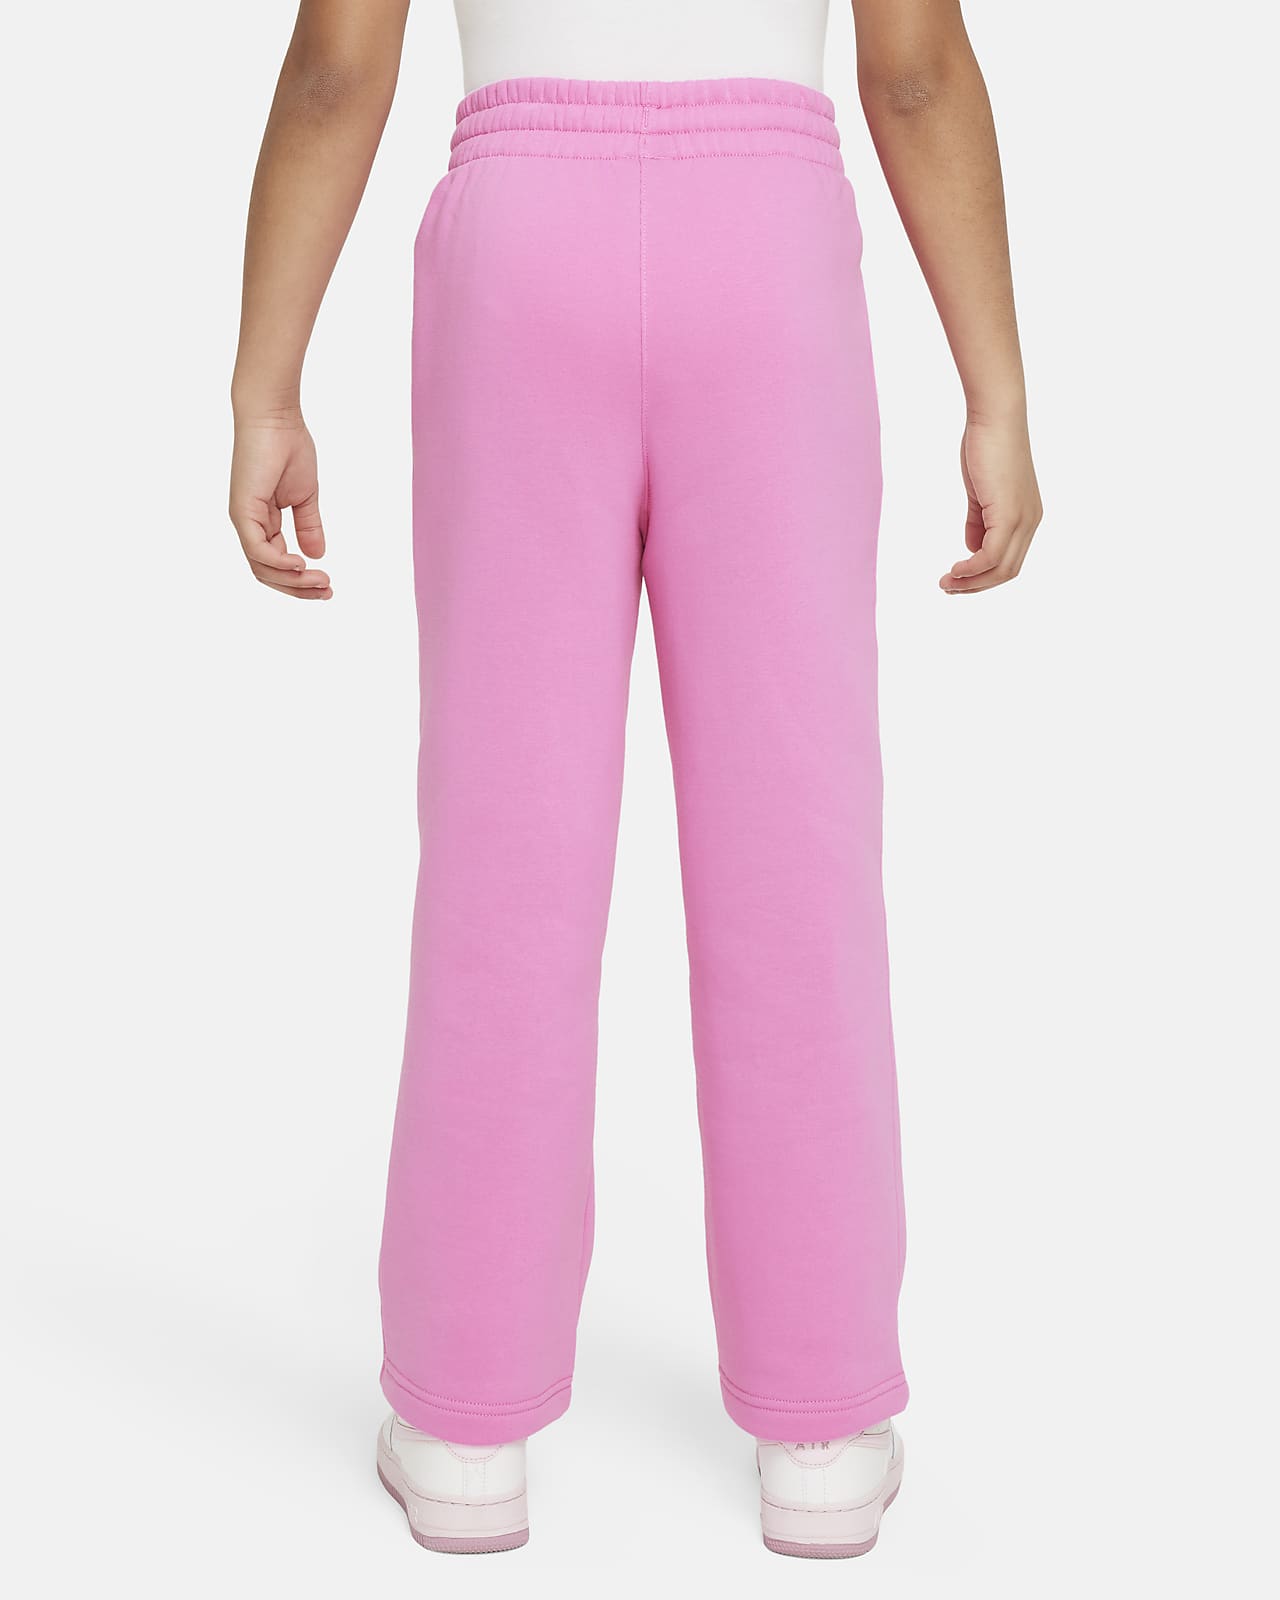 Girls Dri-FIT Pants. Nike.com